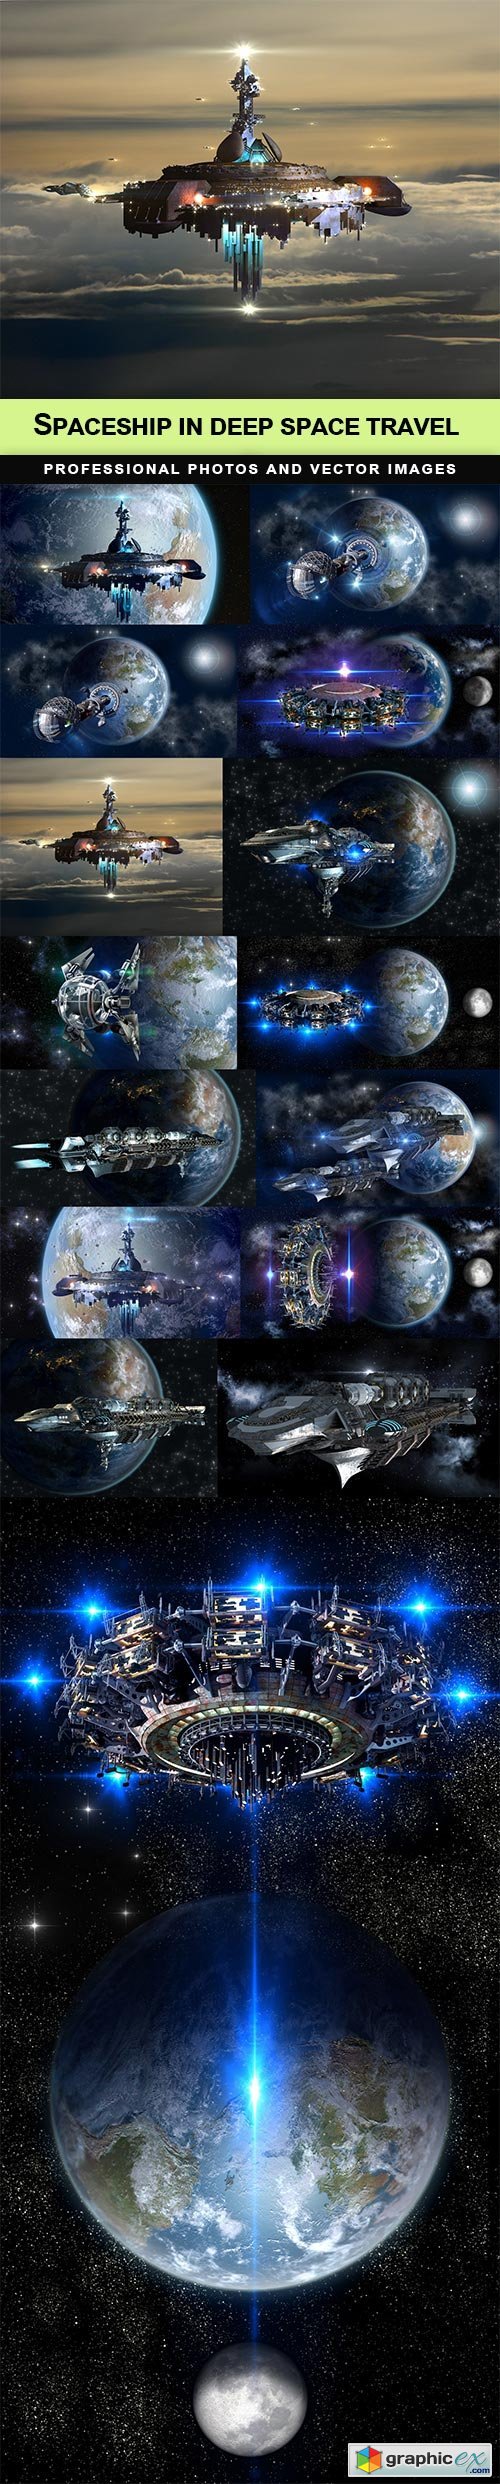 Spaceship in deep space travel - 15 UHQ JPEG